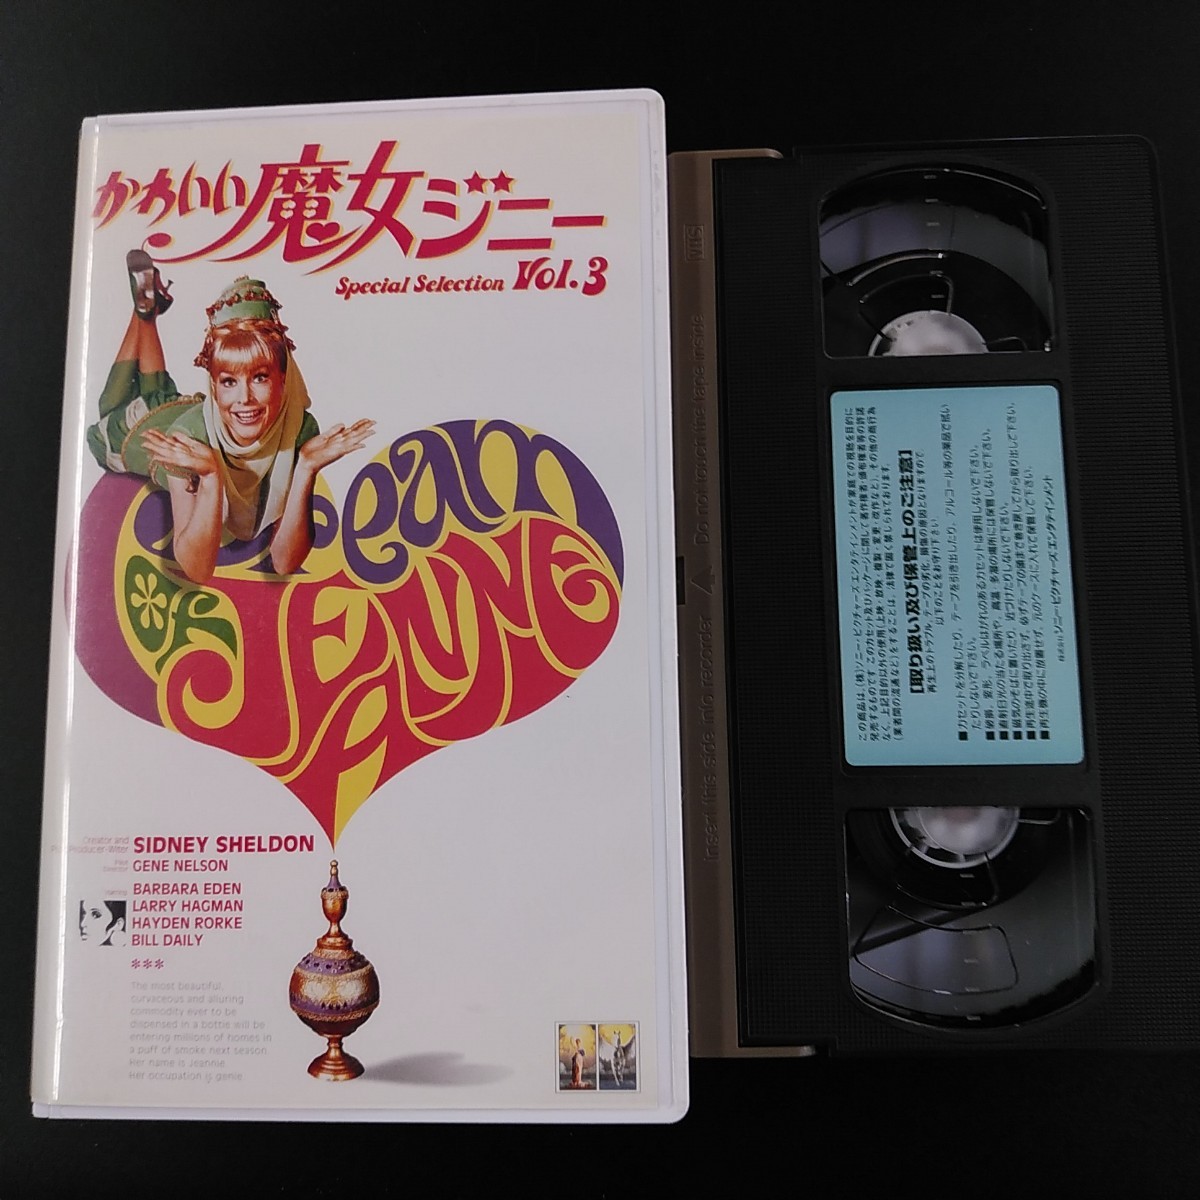 VHS-13】 かわいい魔女ジニー セレクションvol.3 ビデオテープ